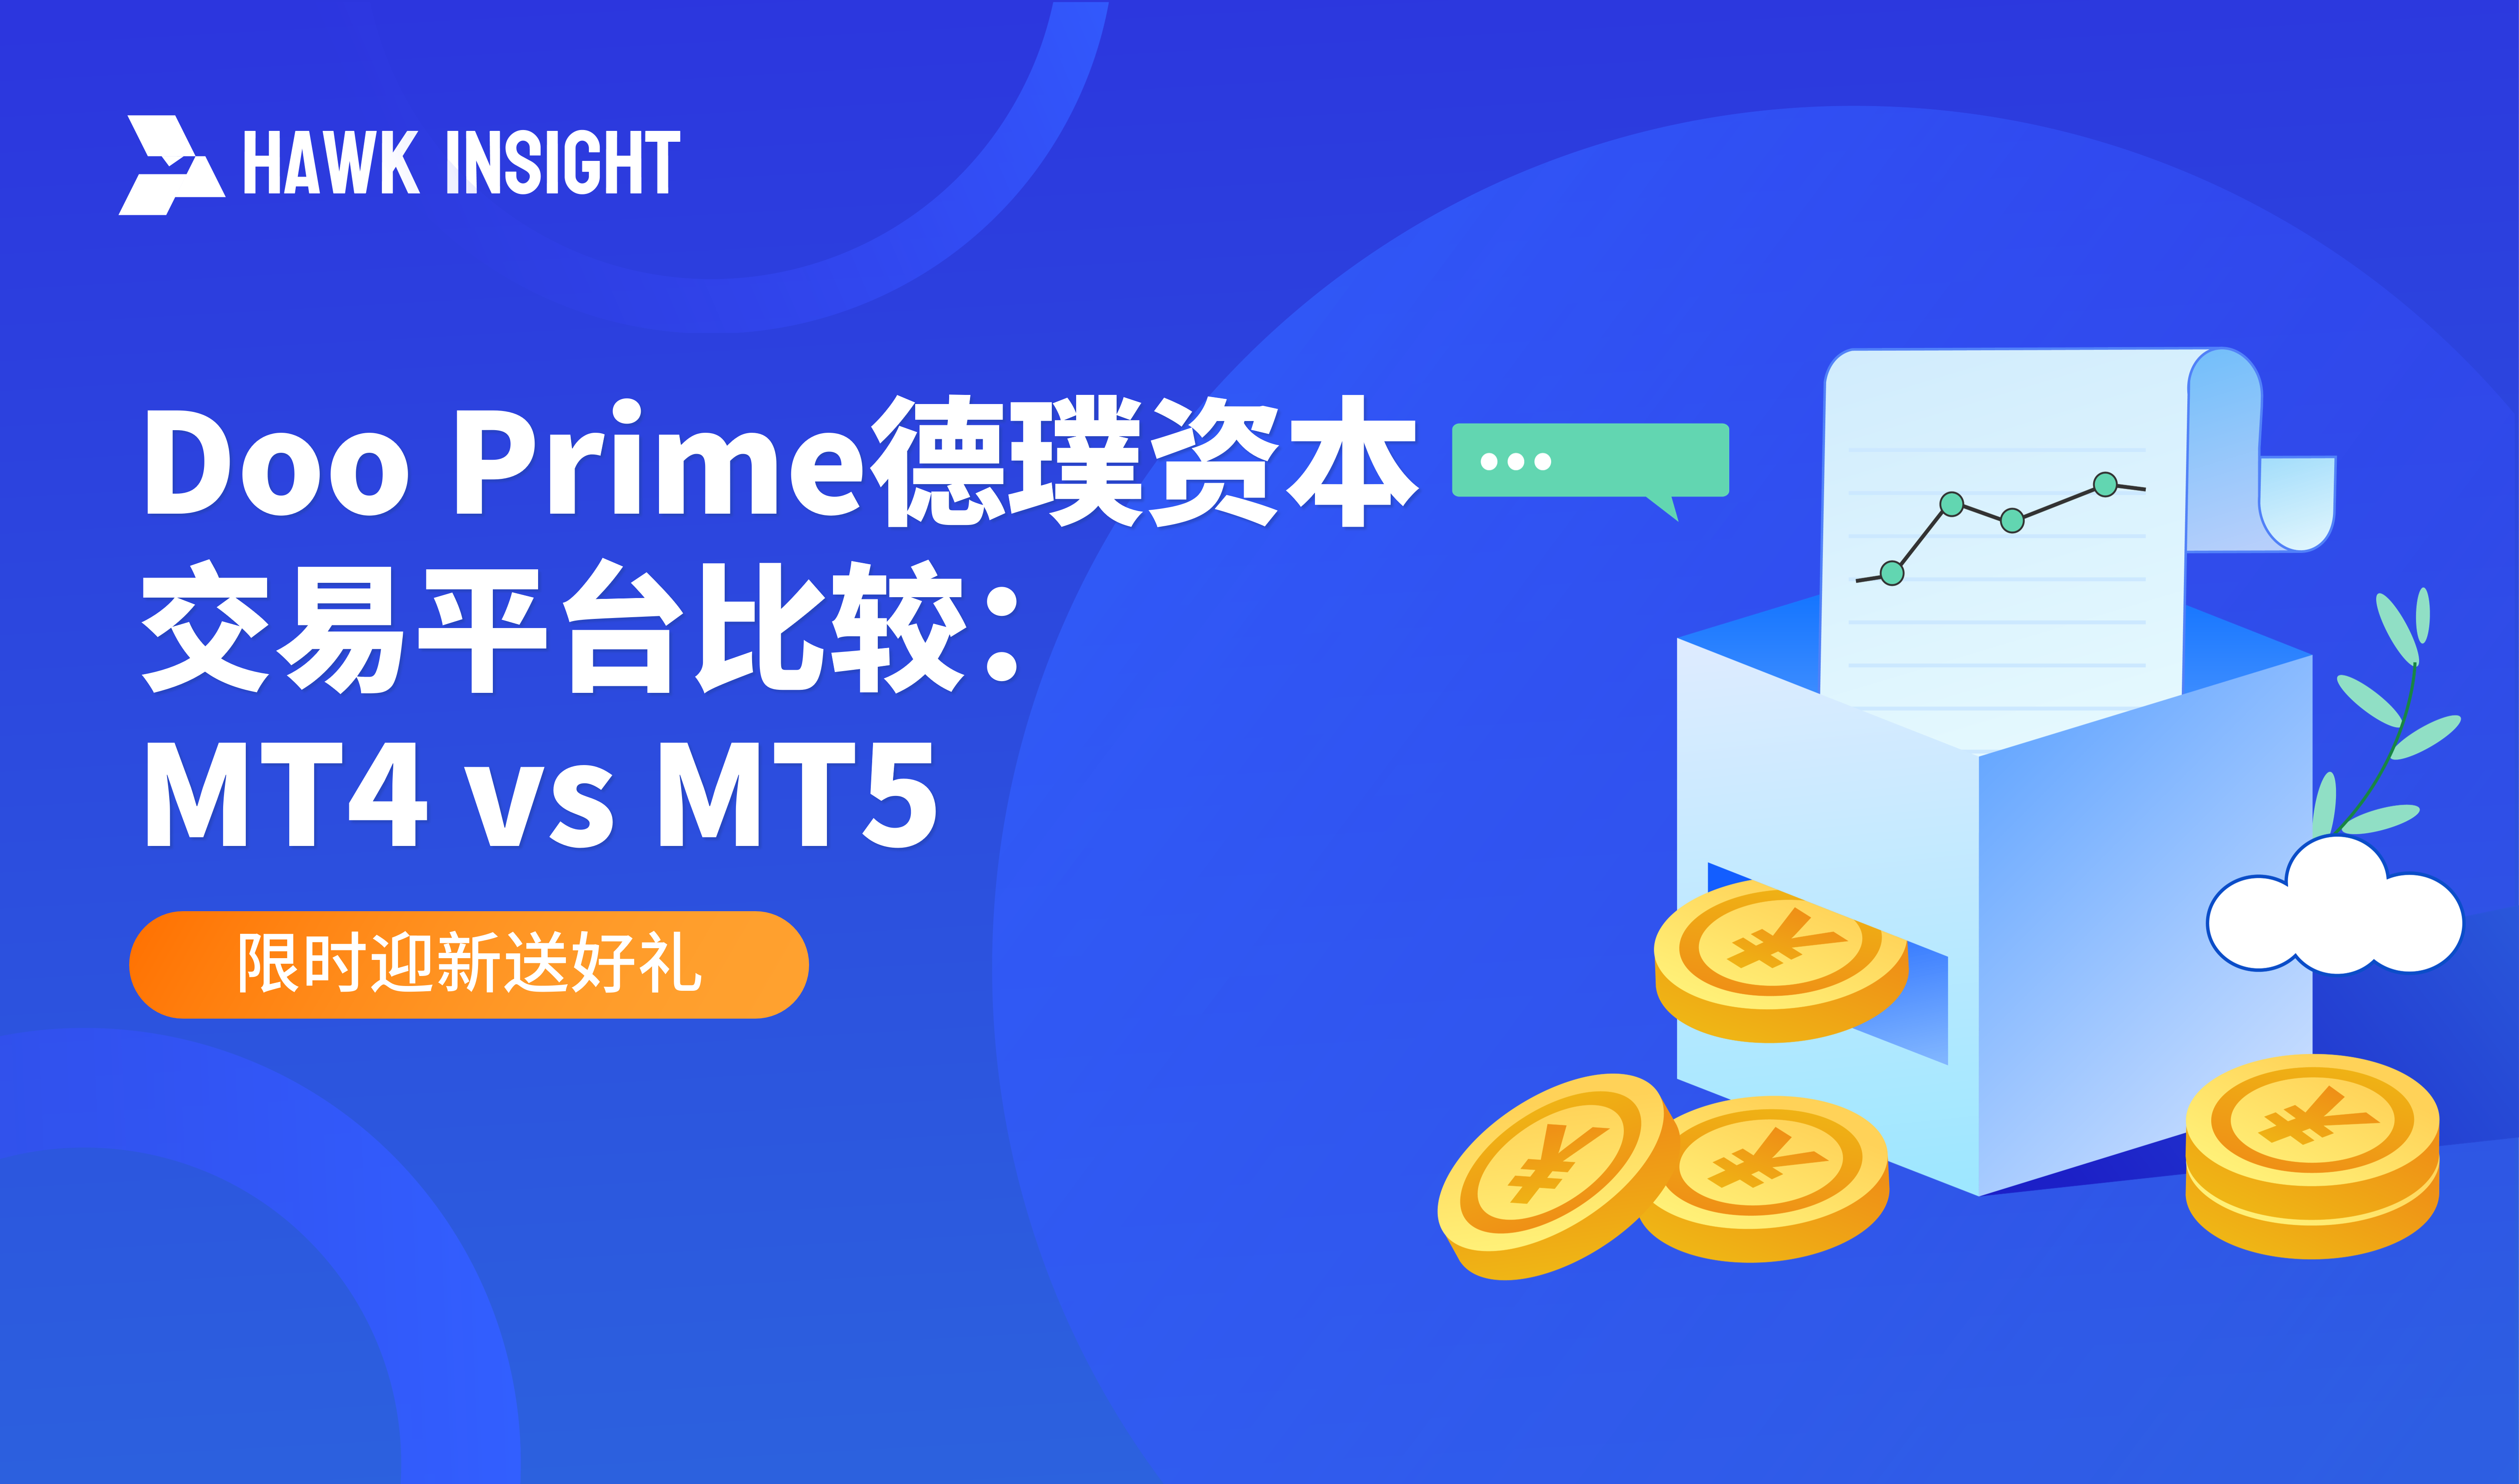 Doo Prime Capital Trading Platforms Comparison: MT4 vs MT5